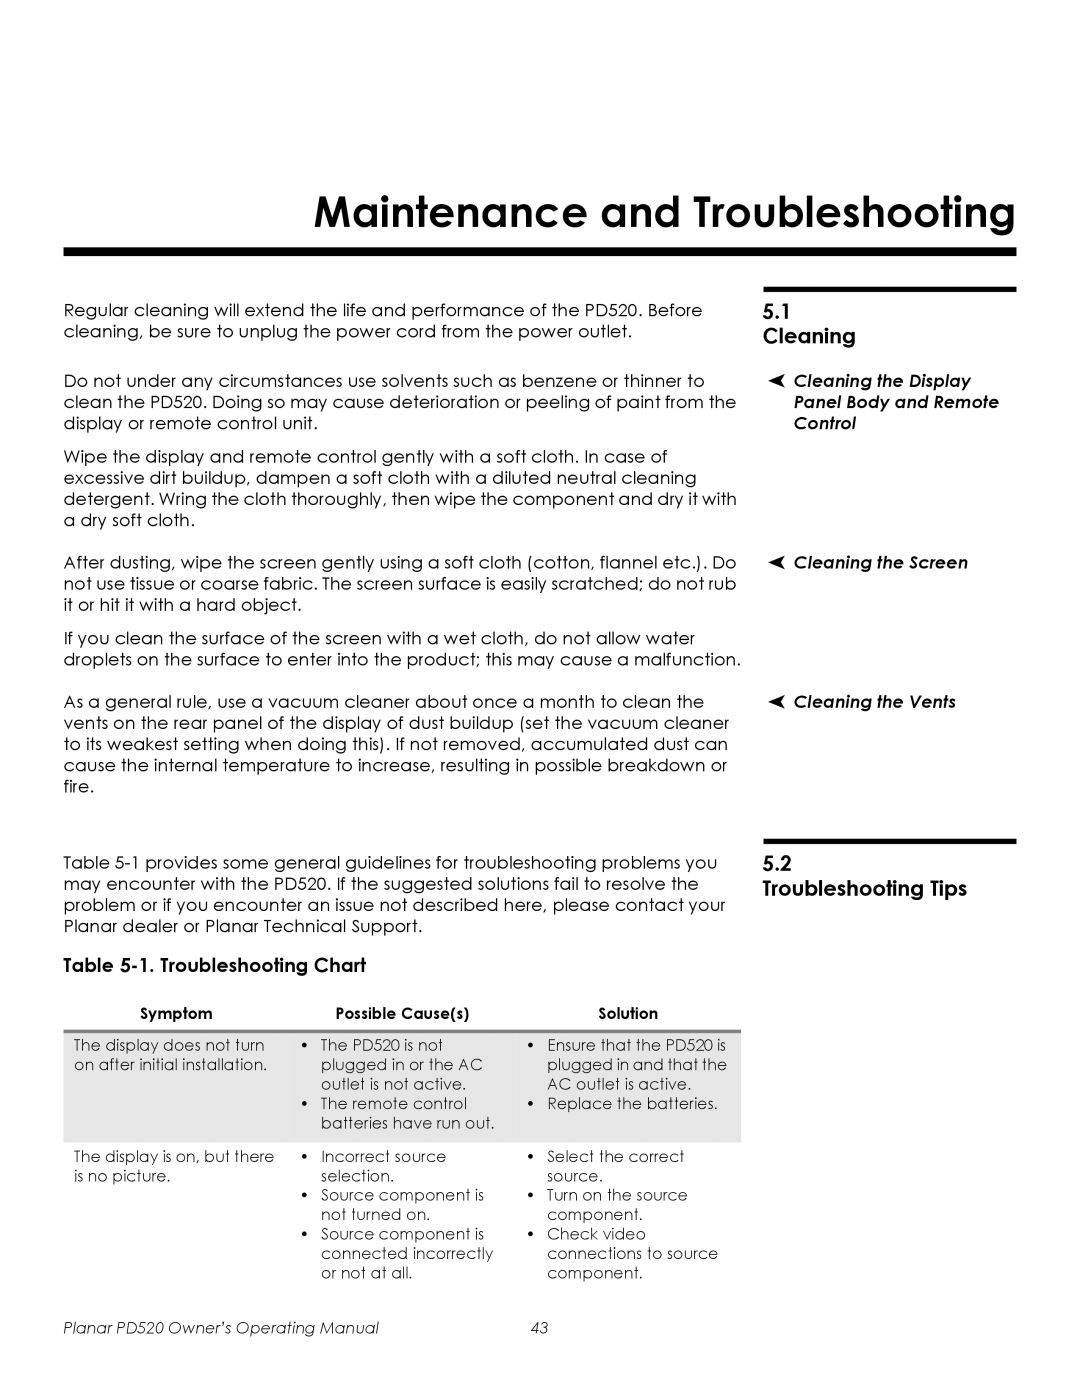 Planar PD520 manual Maintenance and Troubleshooting, Cleaning, Troubleshooting Tips, 1.Troubleshooting Chart, Control 